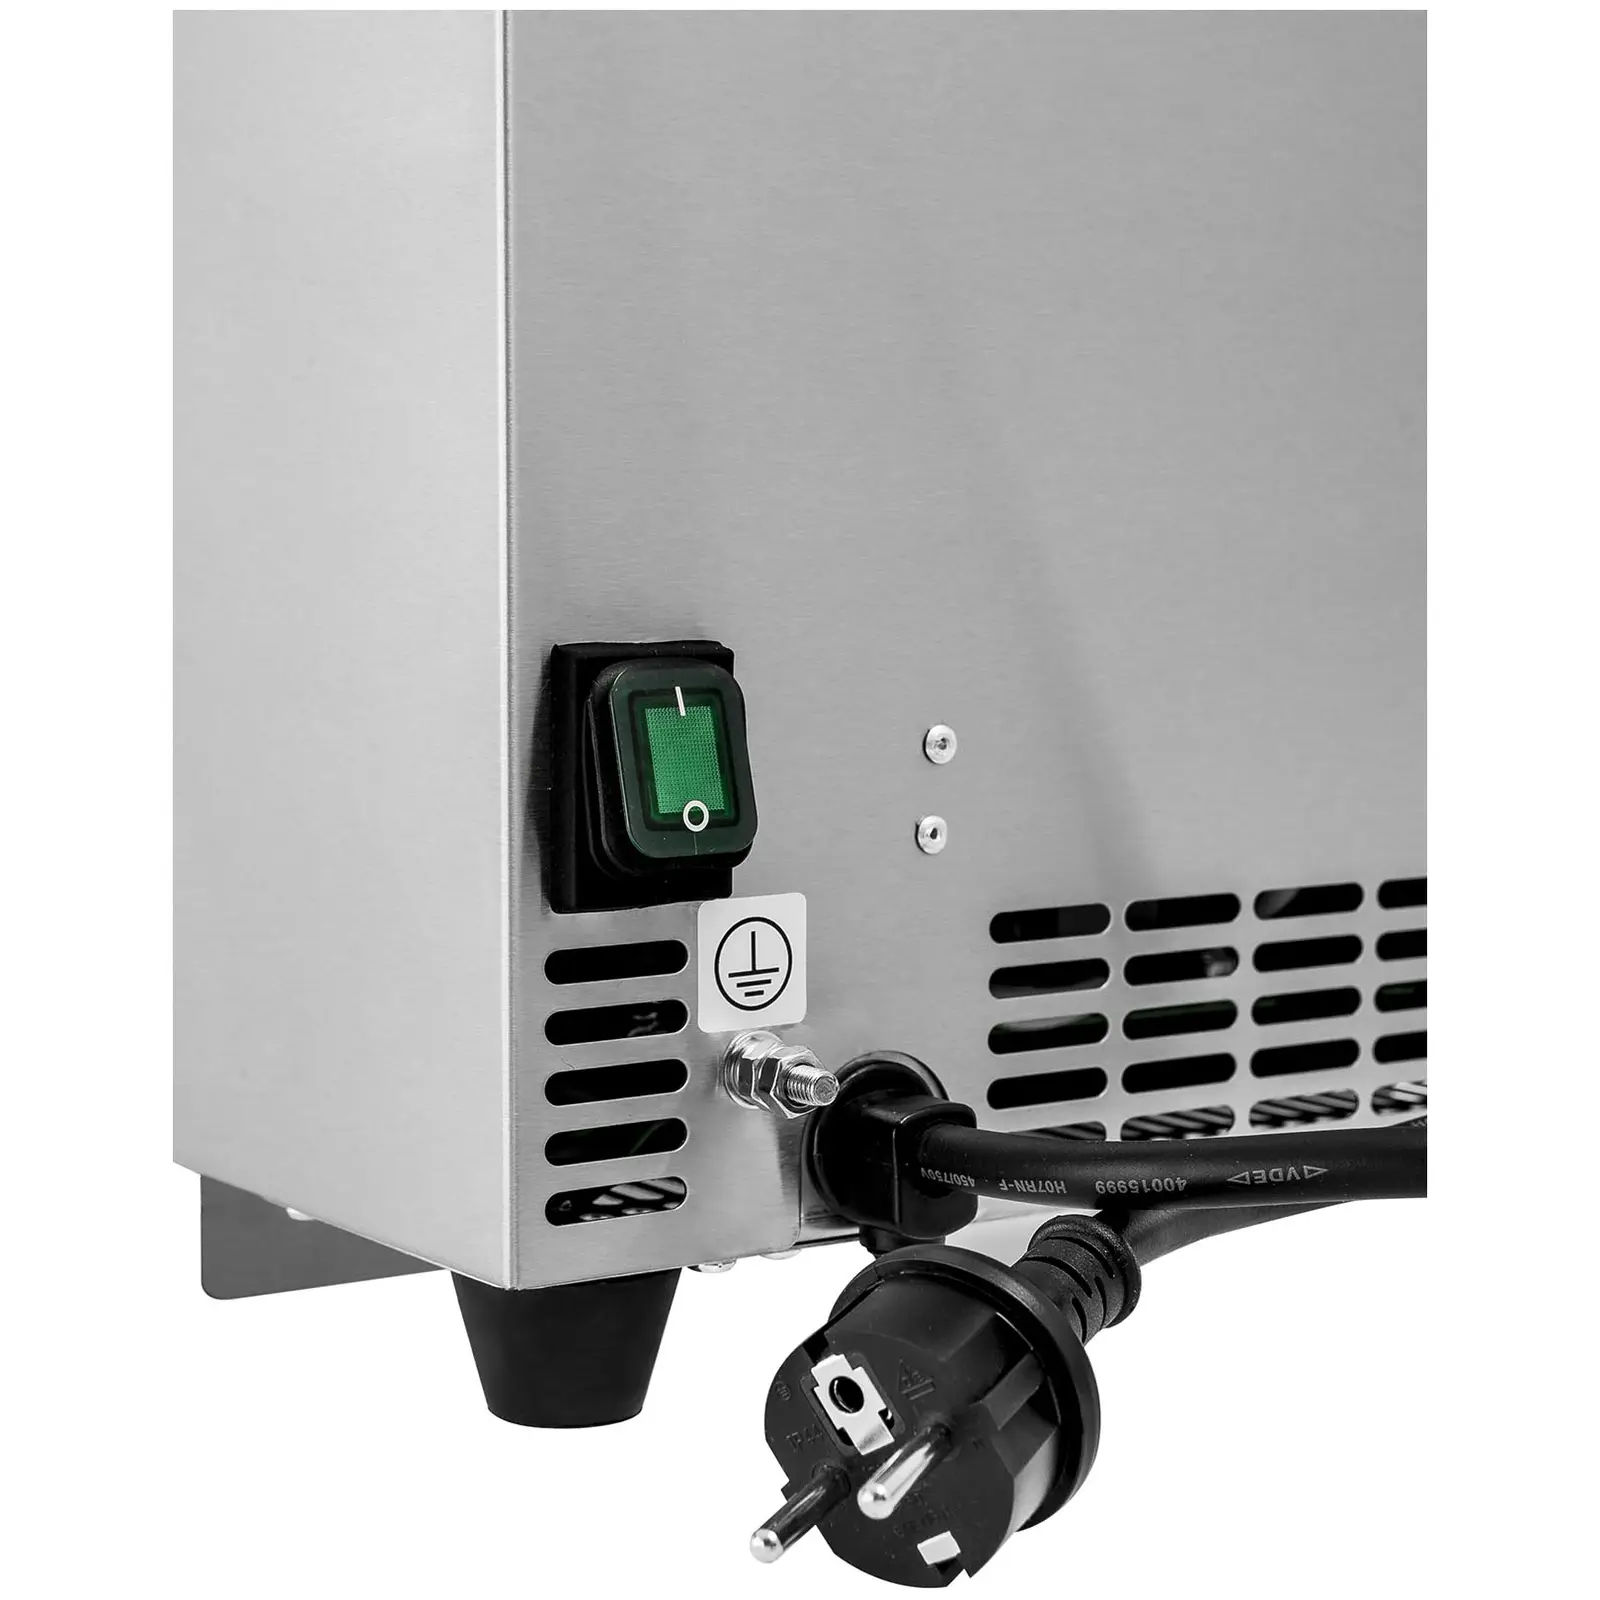 Induktionsfritteuse - 10 Liter - 60 bis 190 °C